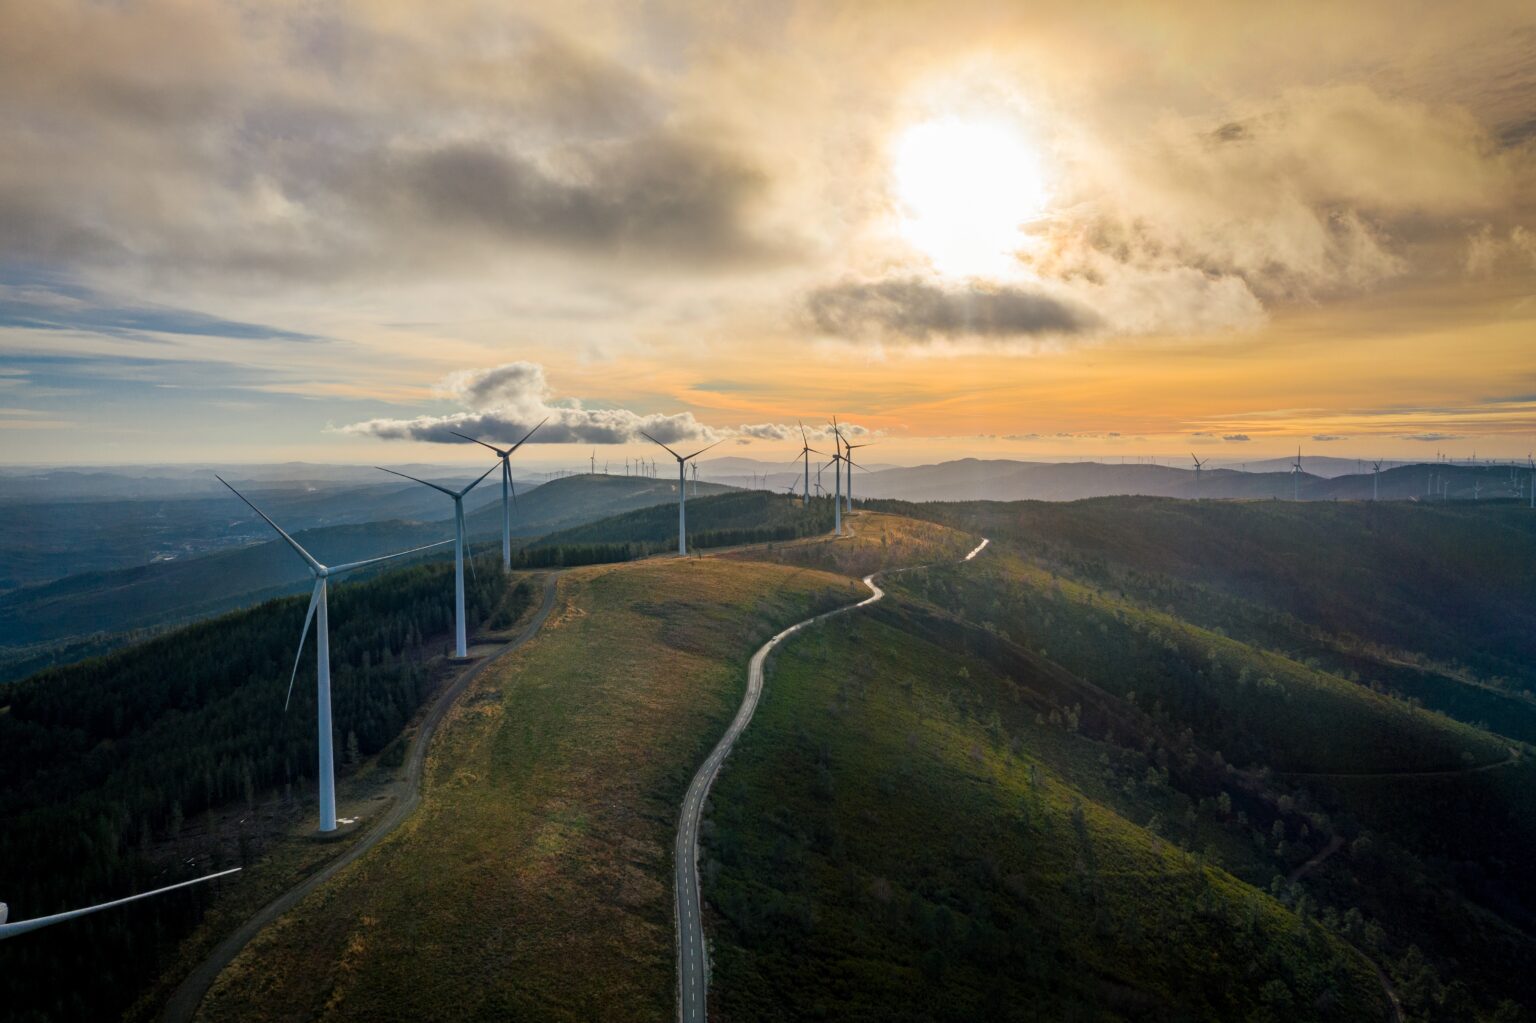 Sustainable Wind Energy